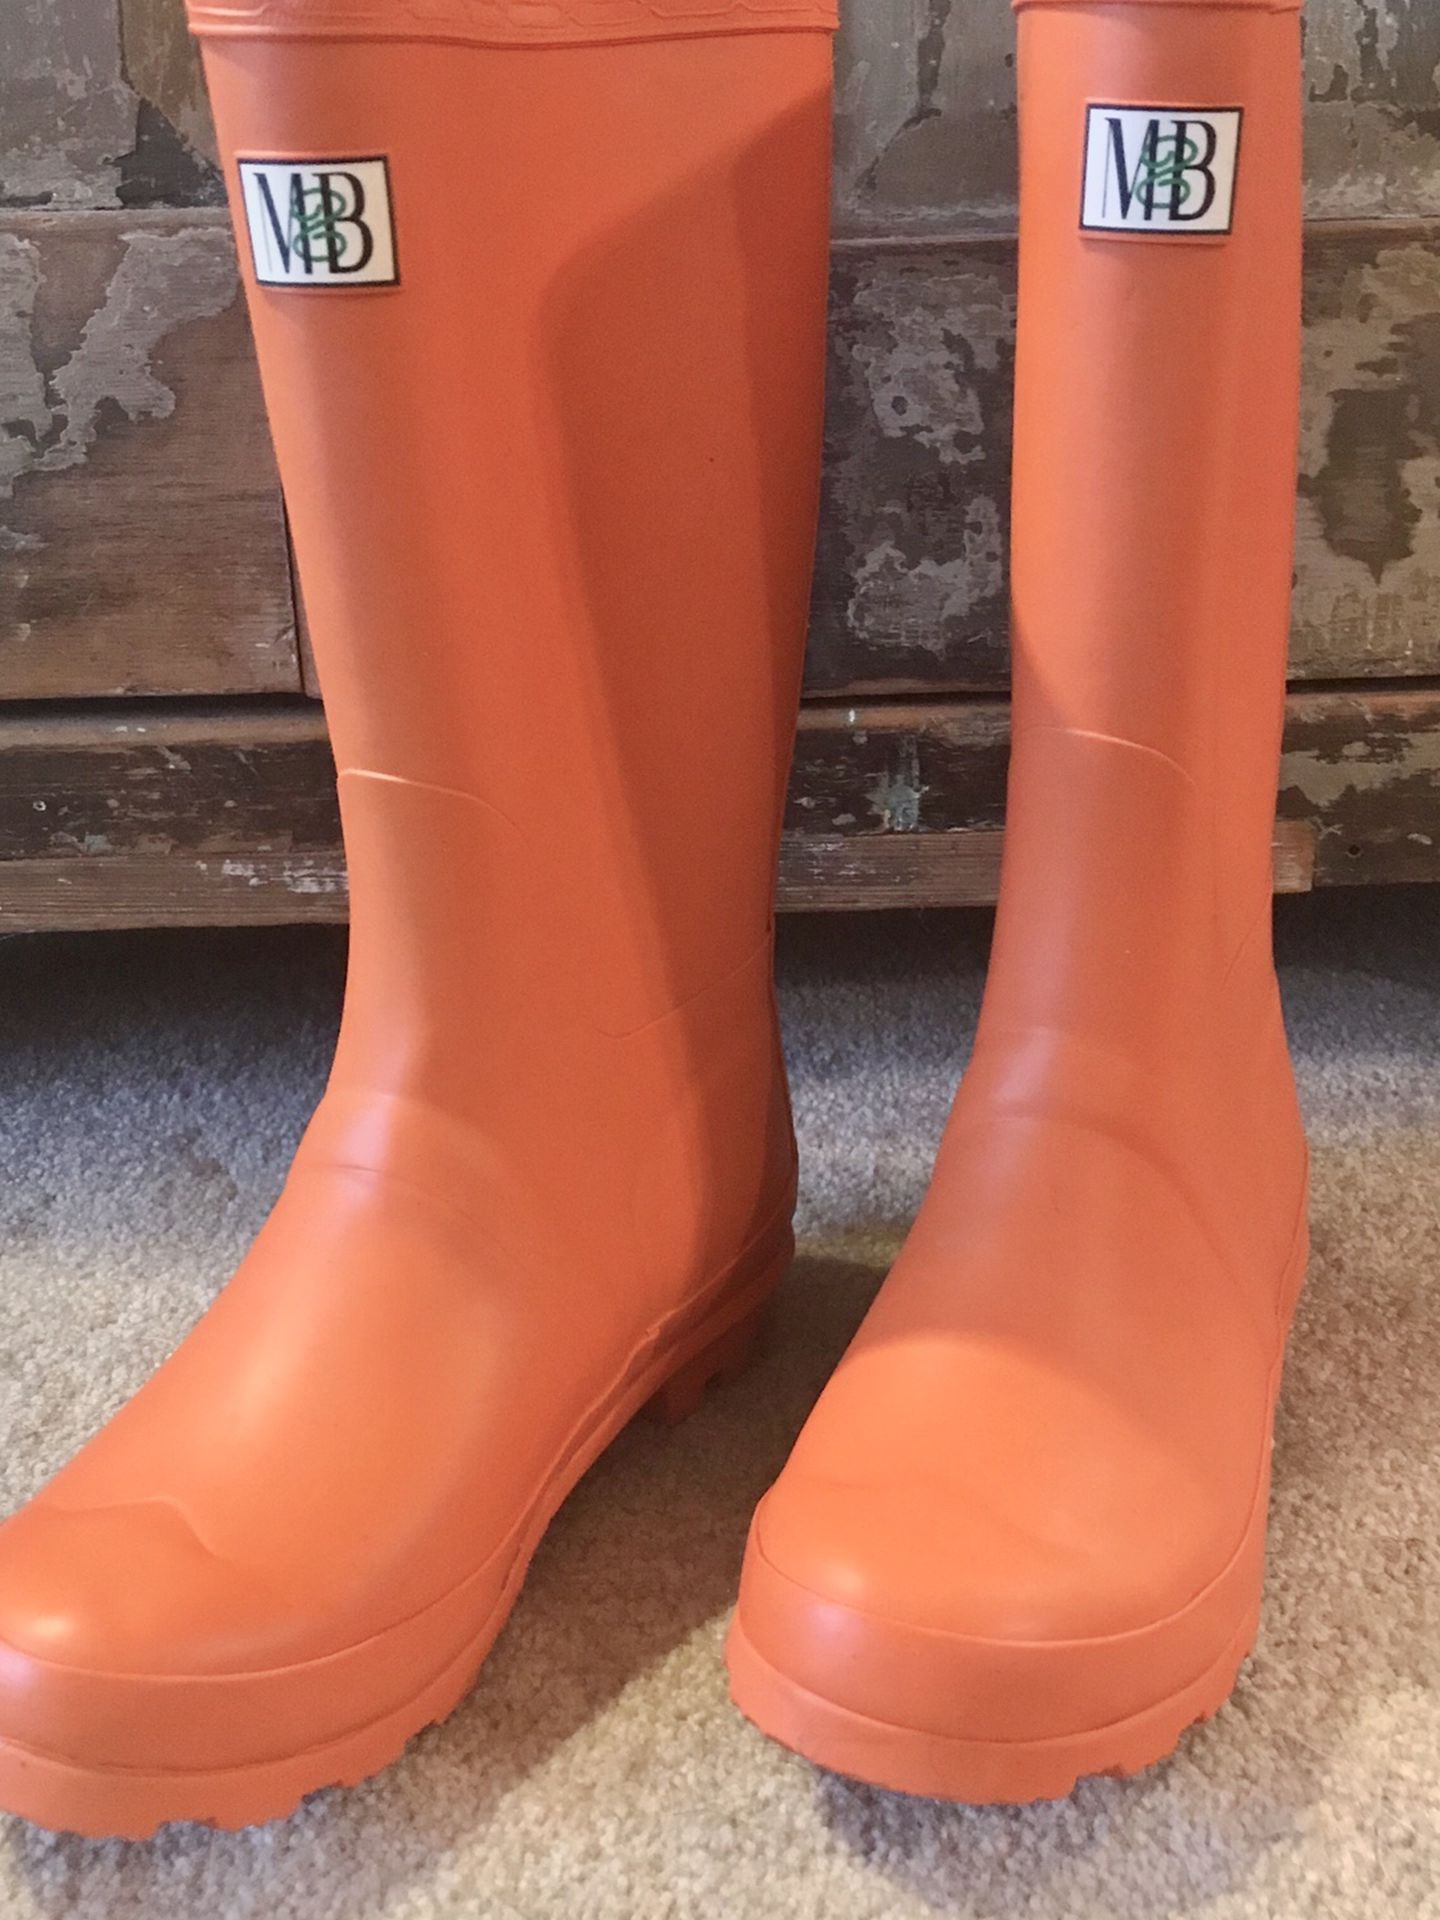 MB Rain Boots Girls Size 3